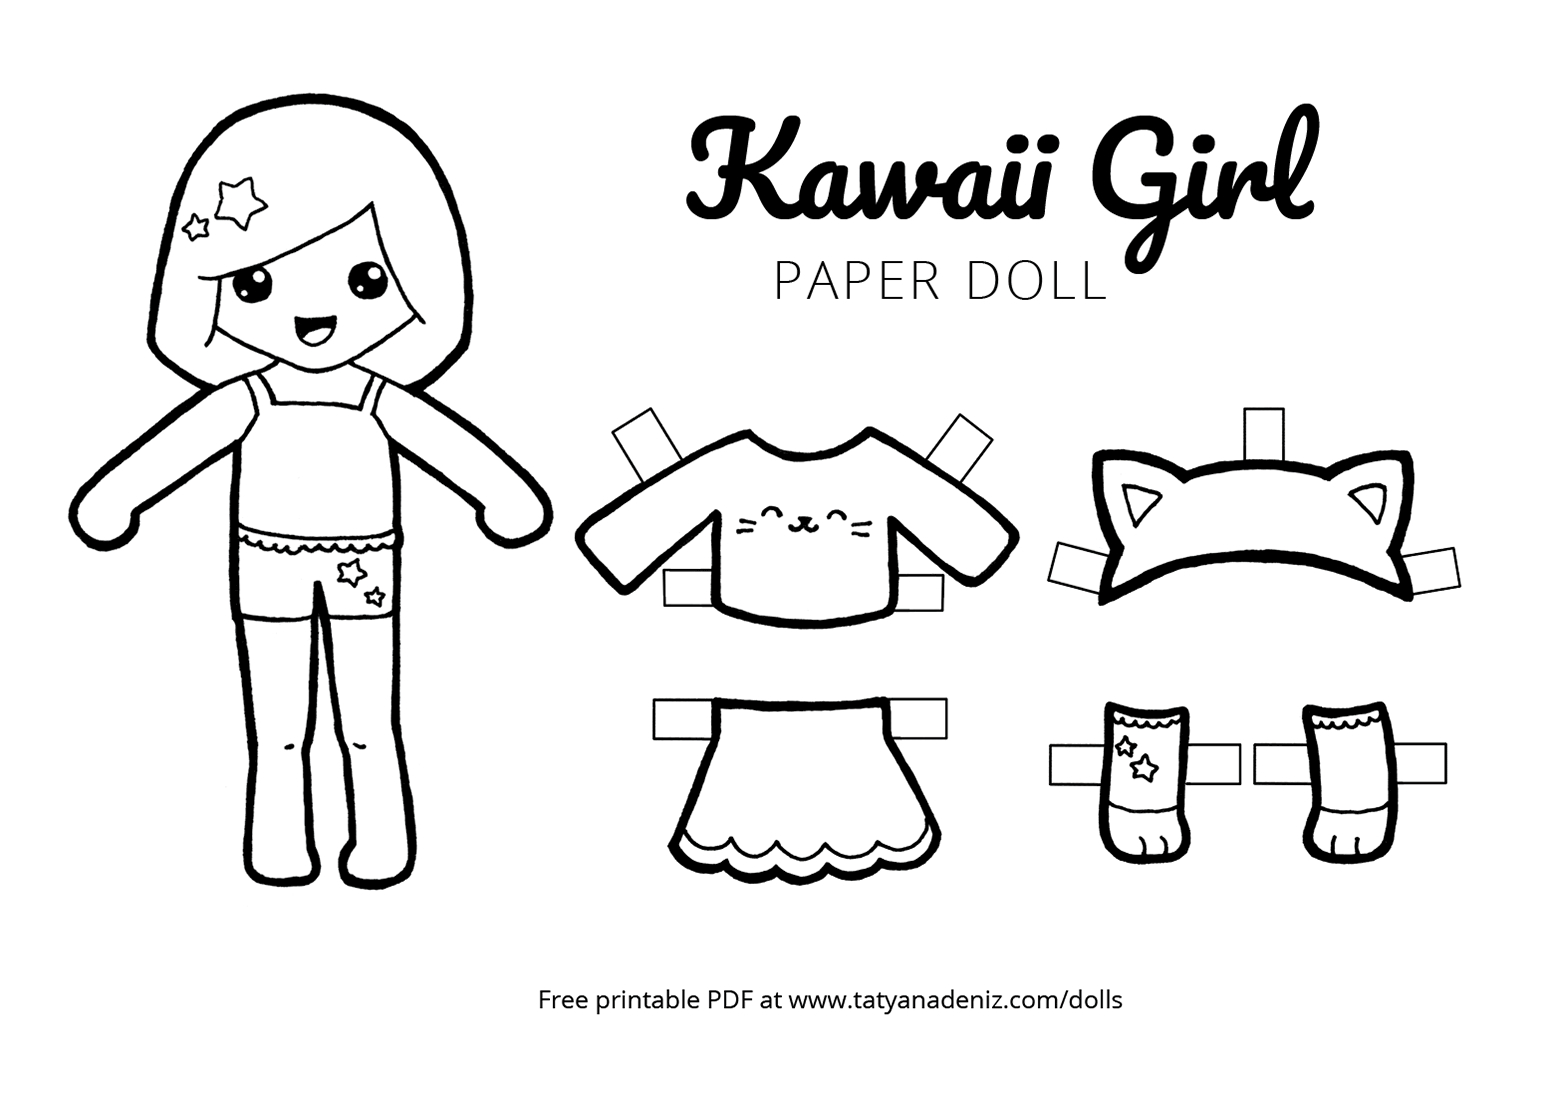 Free Printable Kawaii Paper Dolls Colouring Pages - Free Printable Paper Doll Coloring Pages